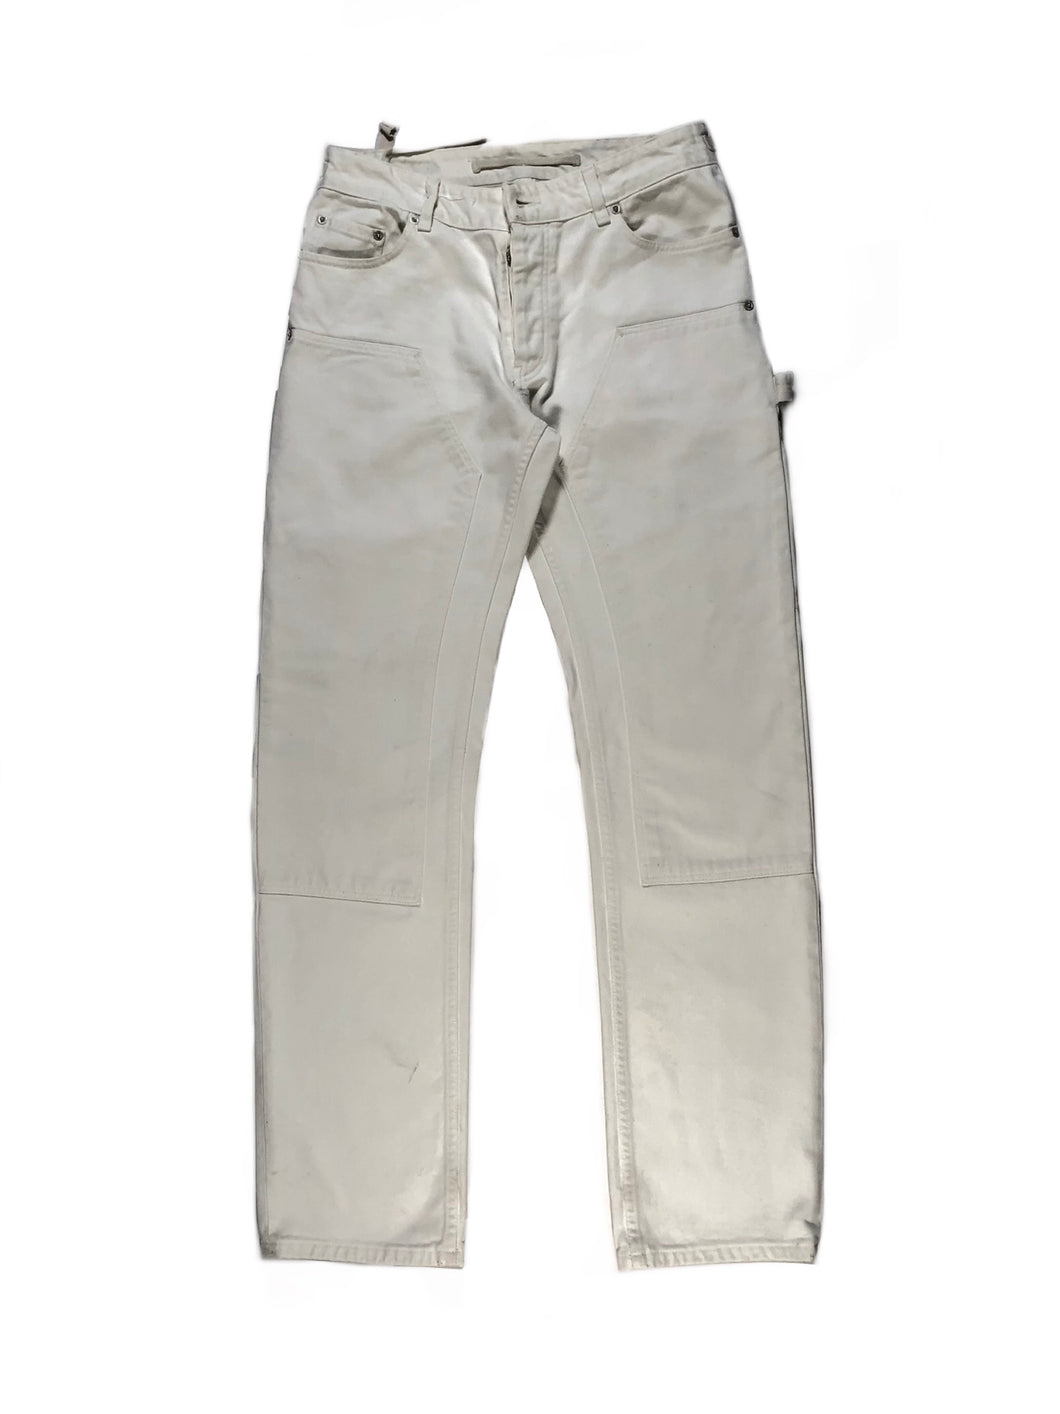 1999 Helmut Lang double knee carpenter ice white pants